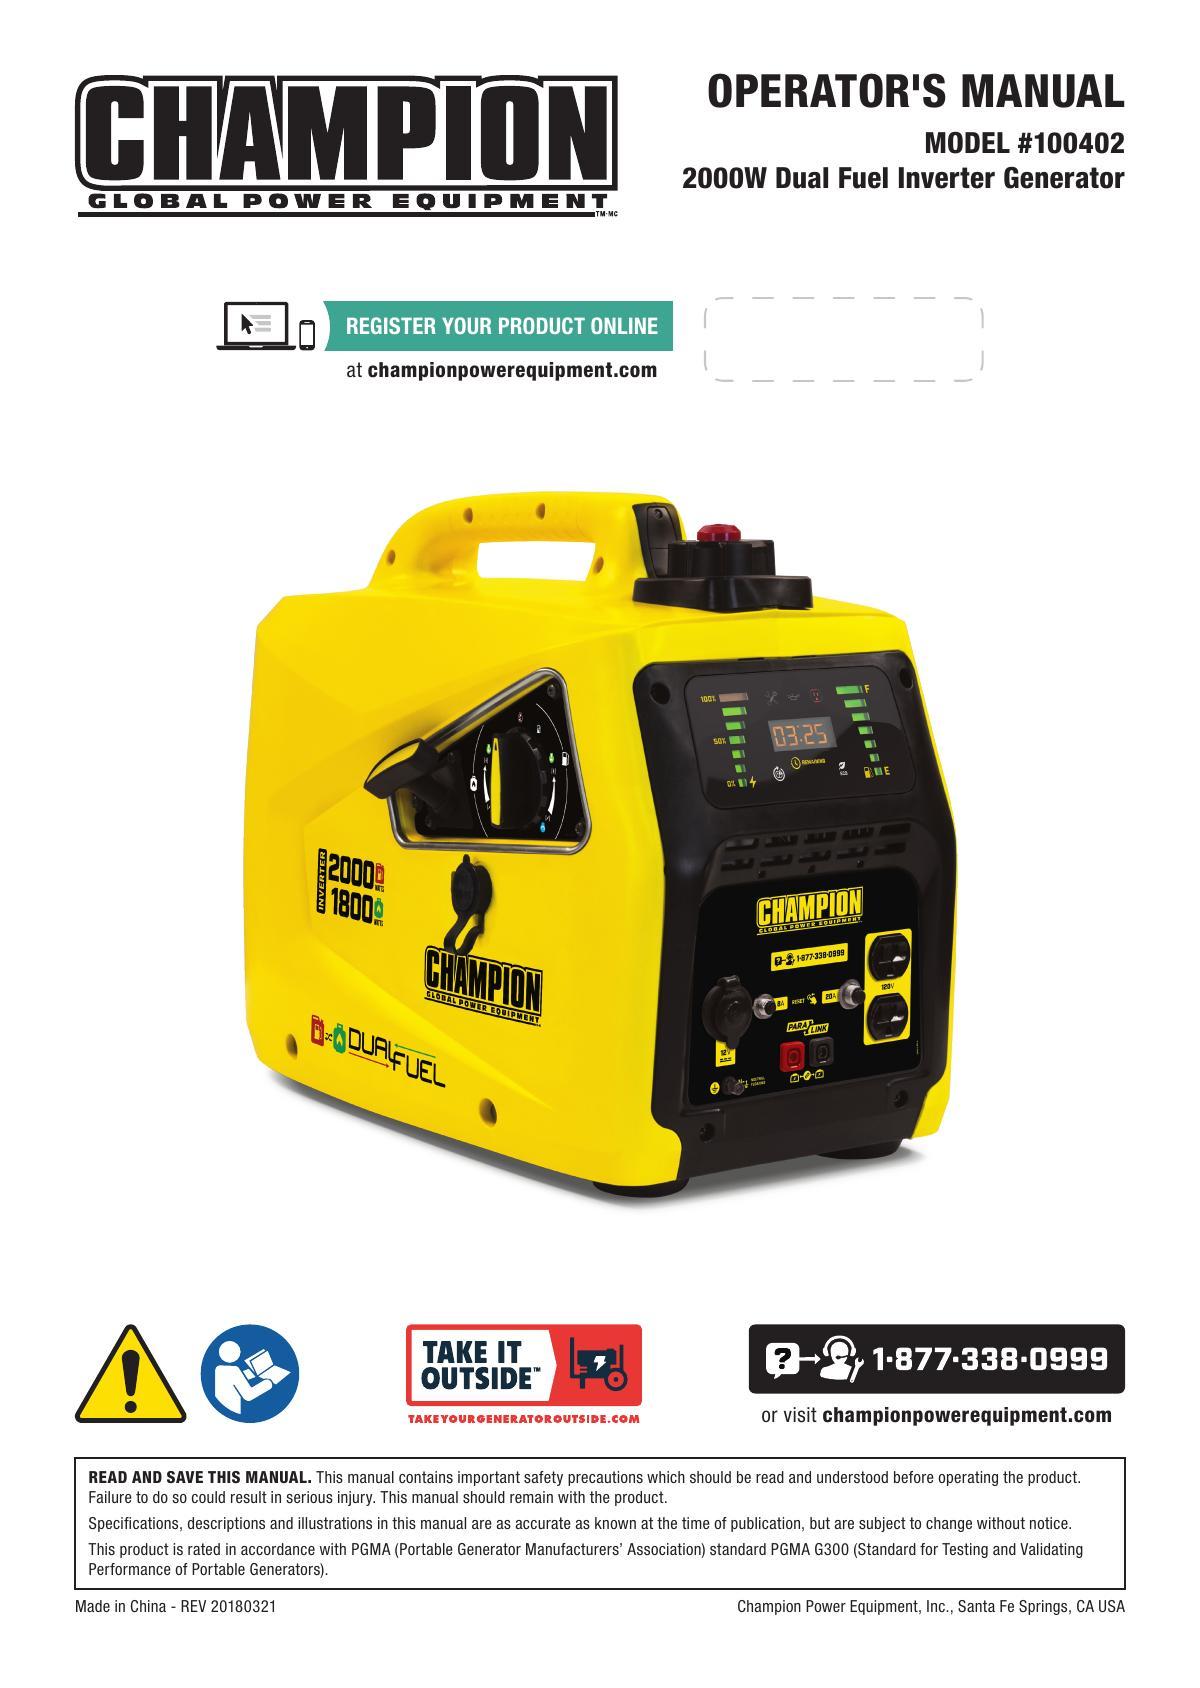 operators-manual-model-100402-2000w-dual-fuel-inverter-generator.pdf